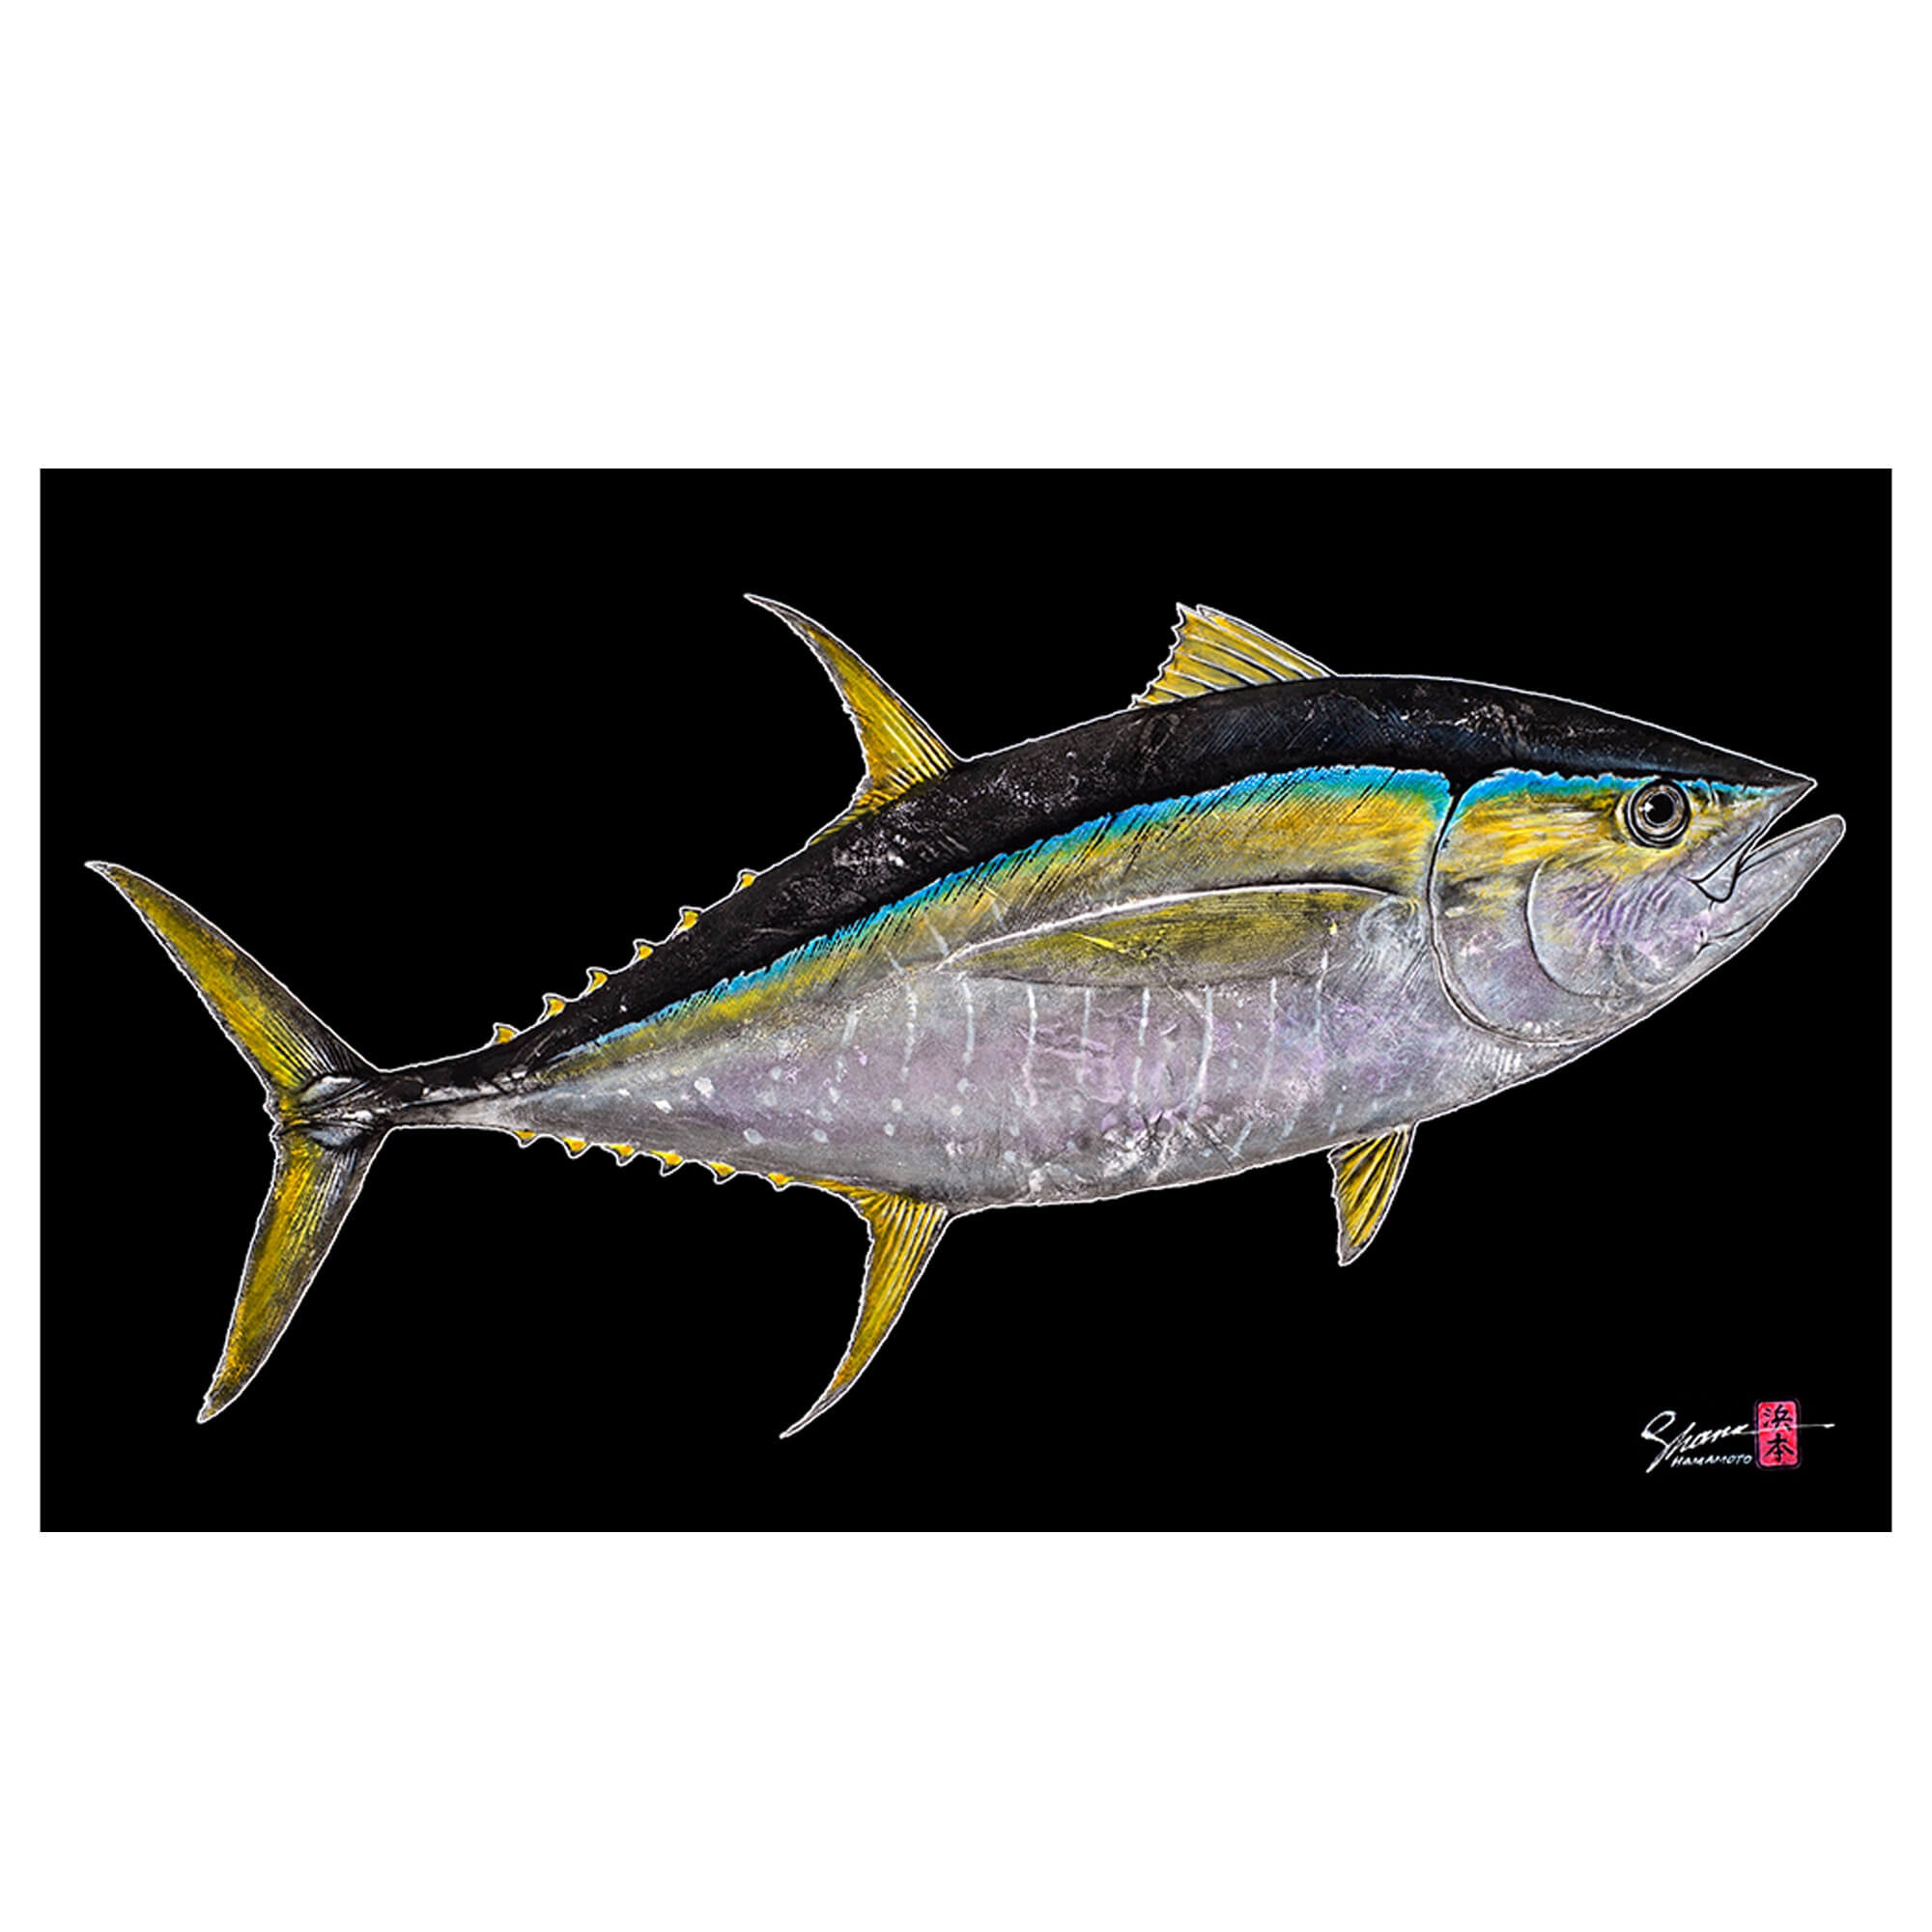 Matted print of Shibi (also known as Yellowfin Tuna) by Hawaii gyotaku artist Shane Hamoto